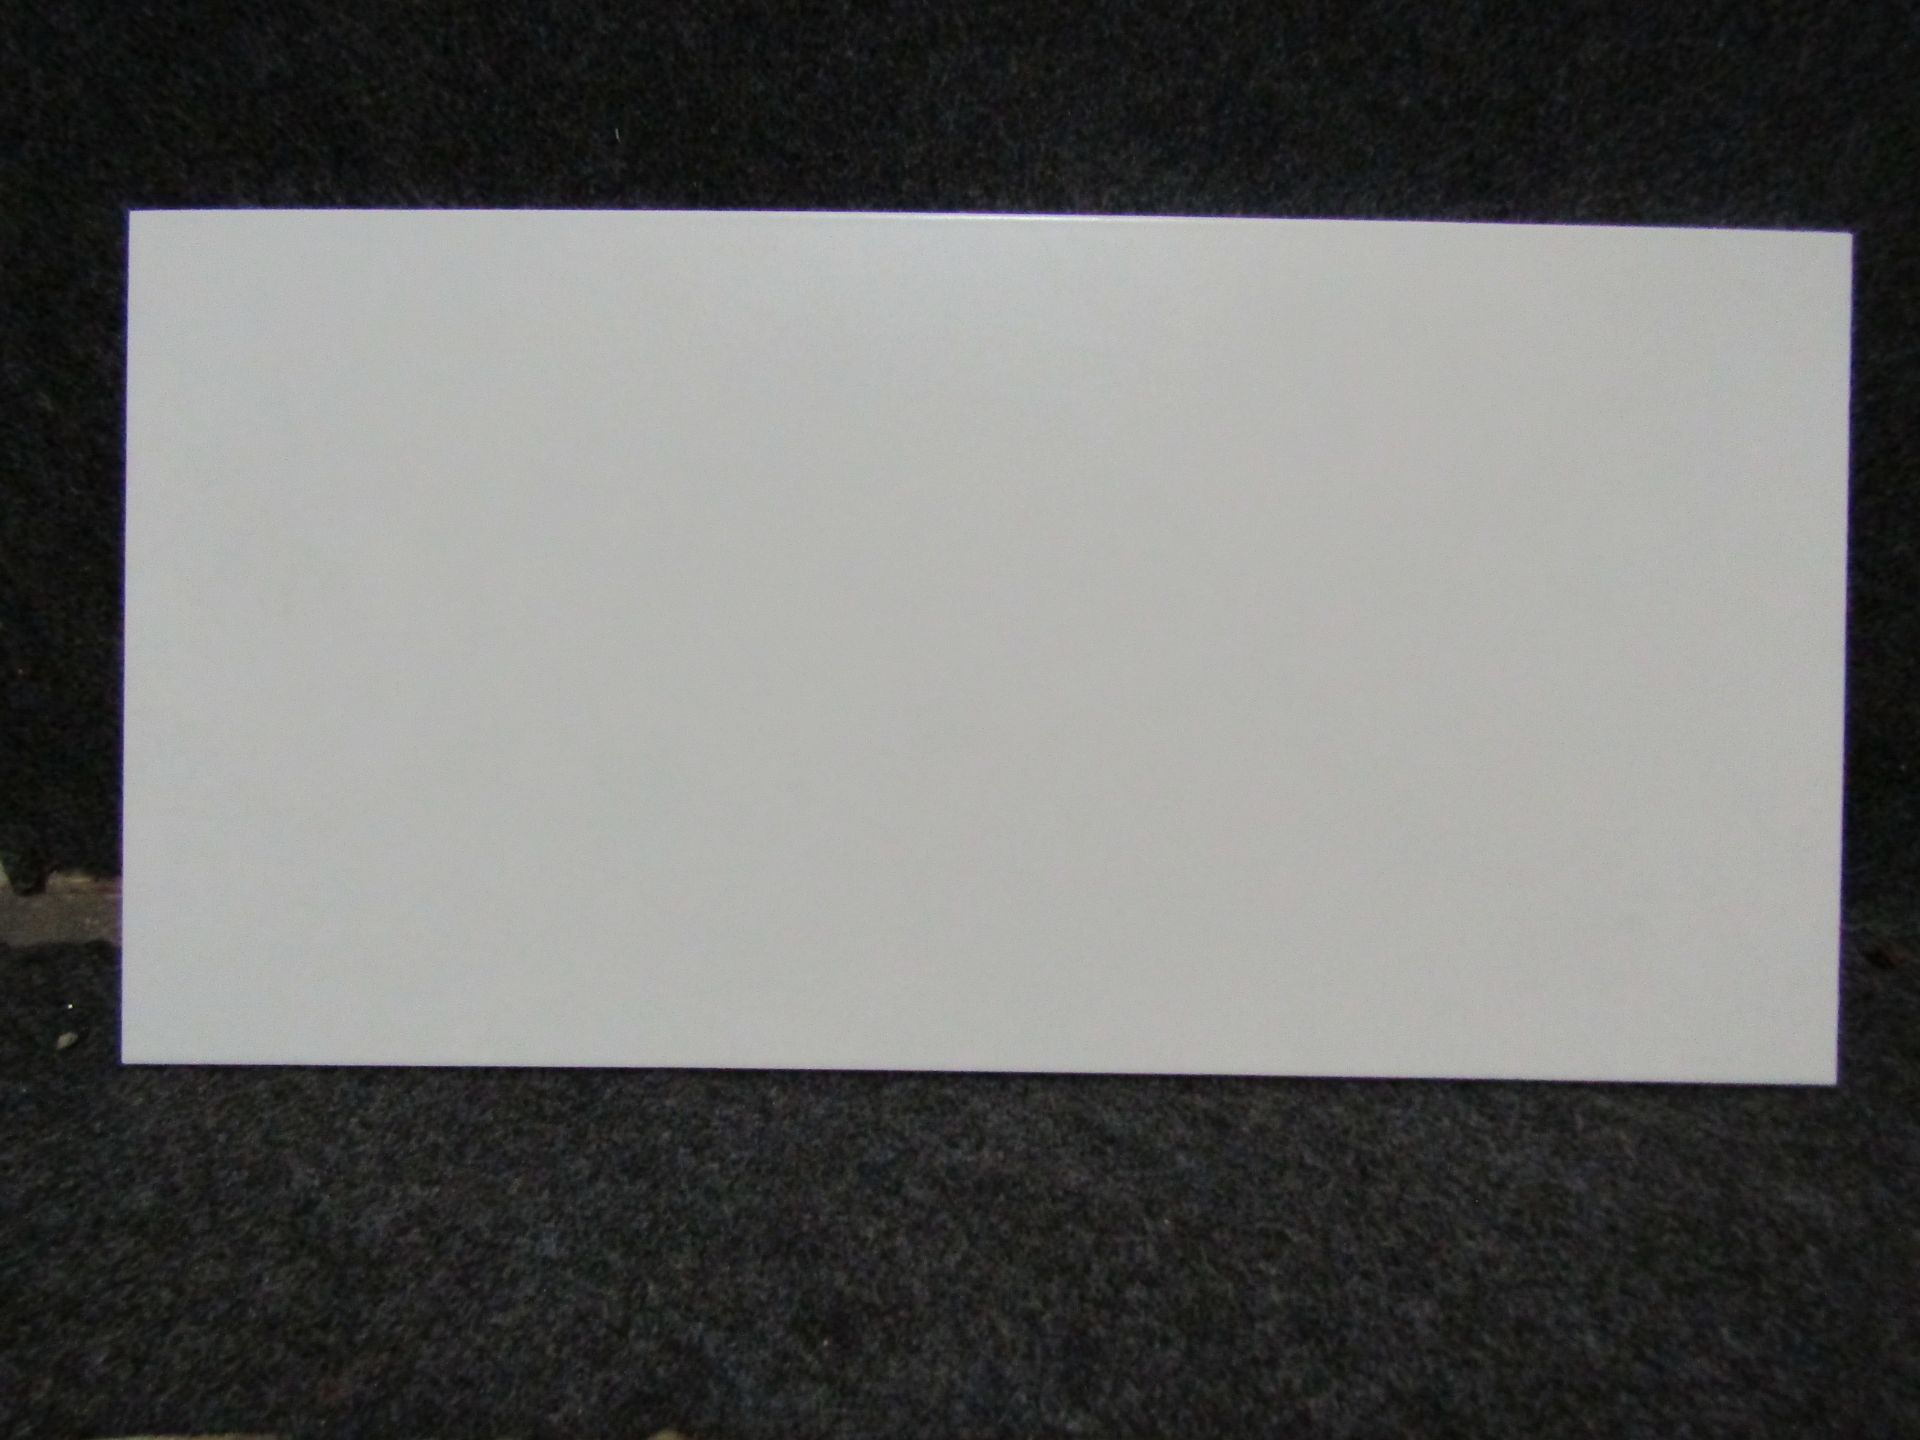 10x Packs of 5 Johnsons 600x300mm Clovelly White Wall & Floor Tiles - AA064YCLOV1A005 - 16KG Per